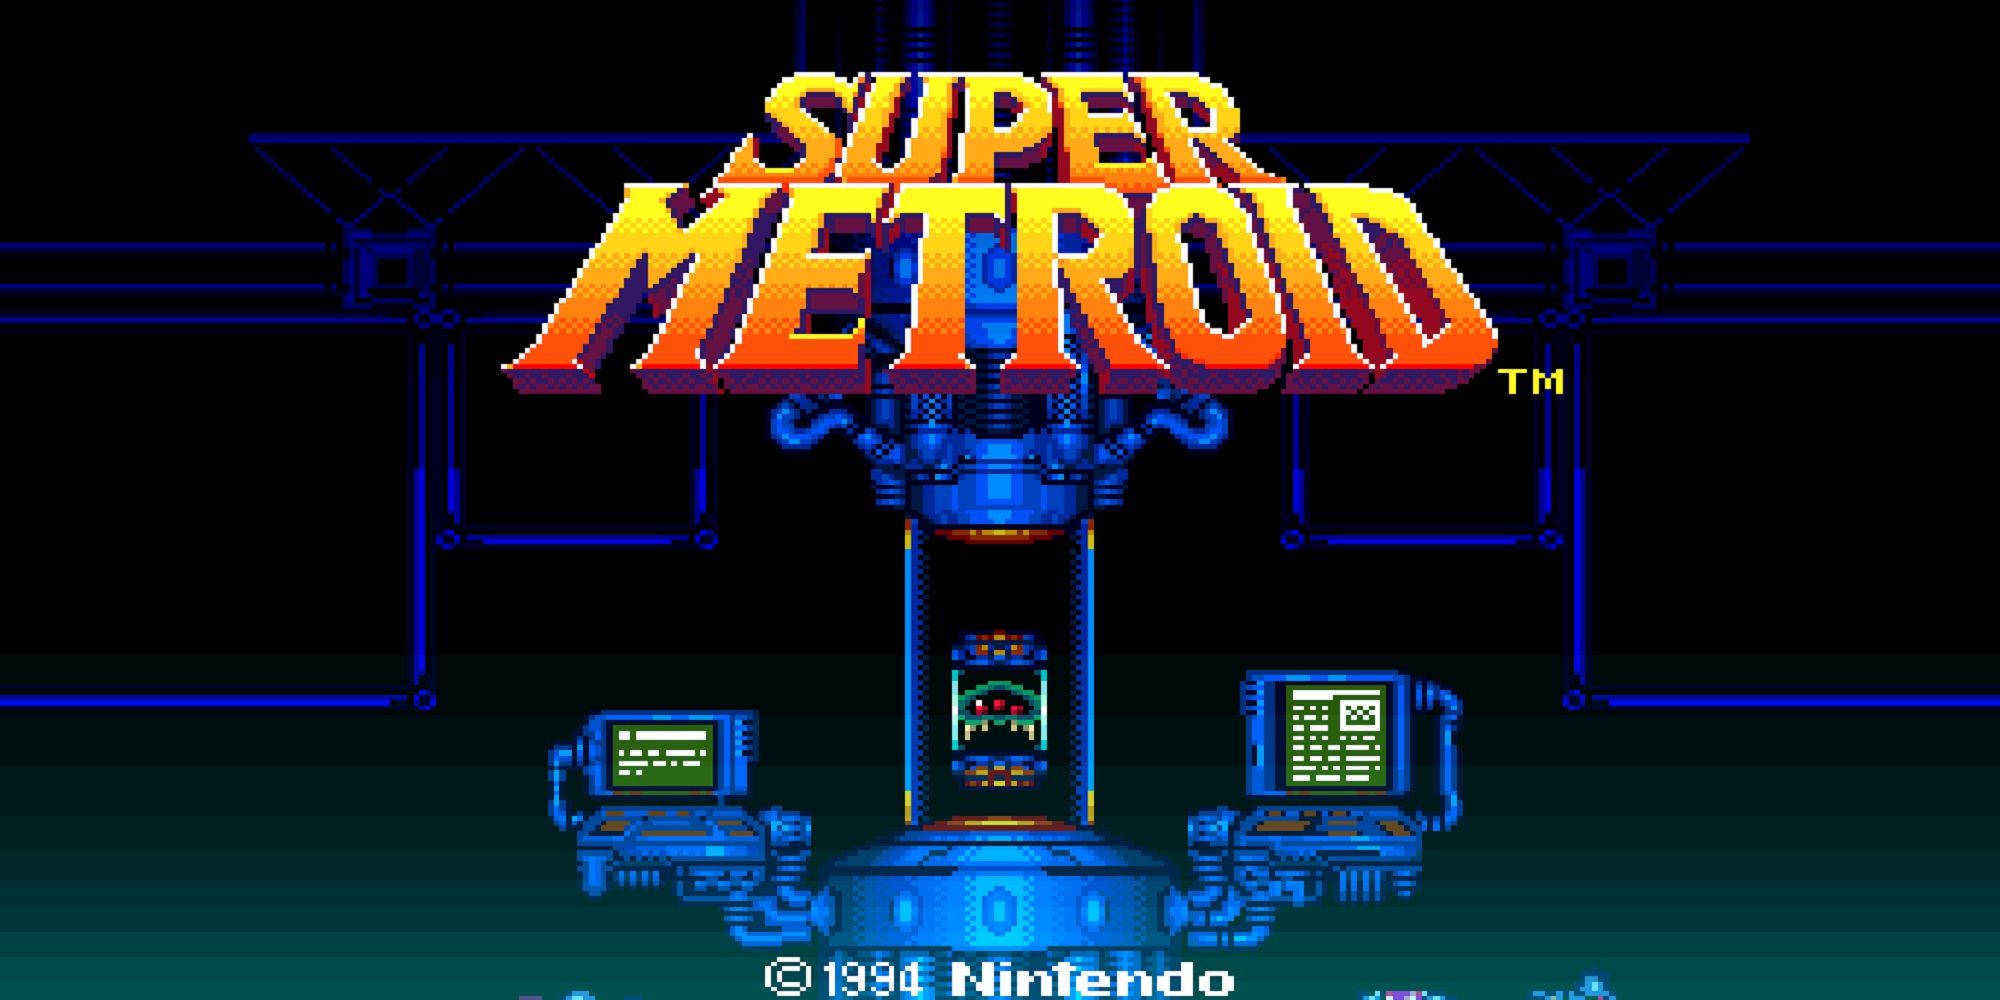 Super Metroid's title screen